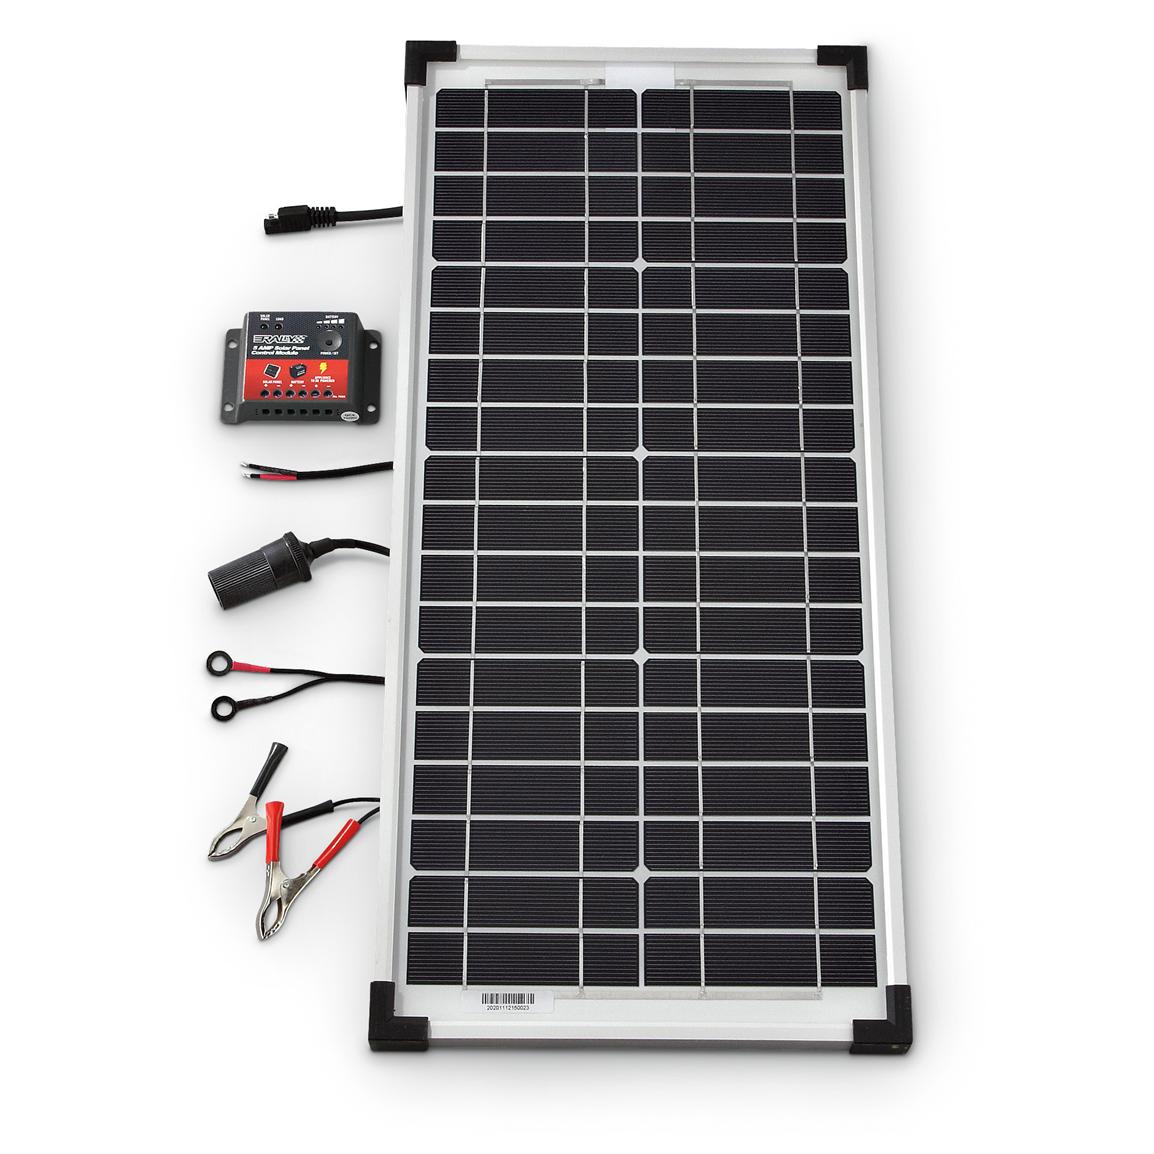 Rally® 20 watt Solar Panel 230868, Solar Panels & Kits at Sportsman's Guide